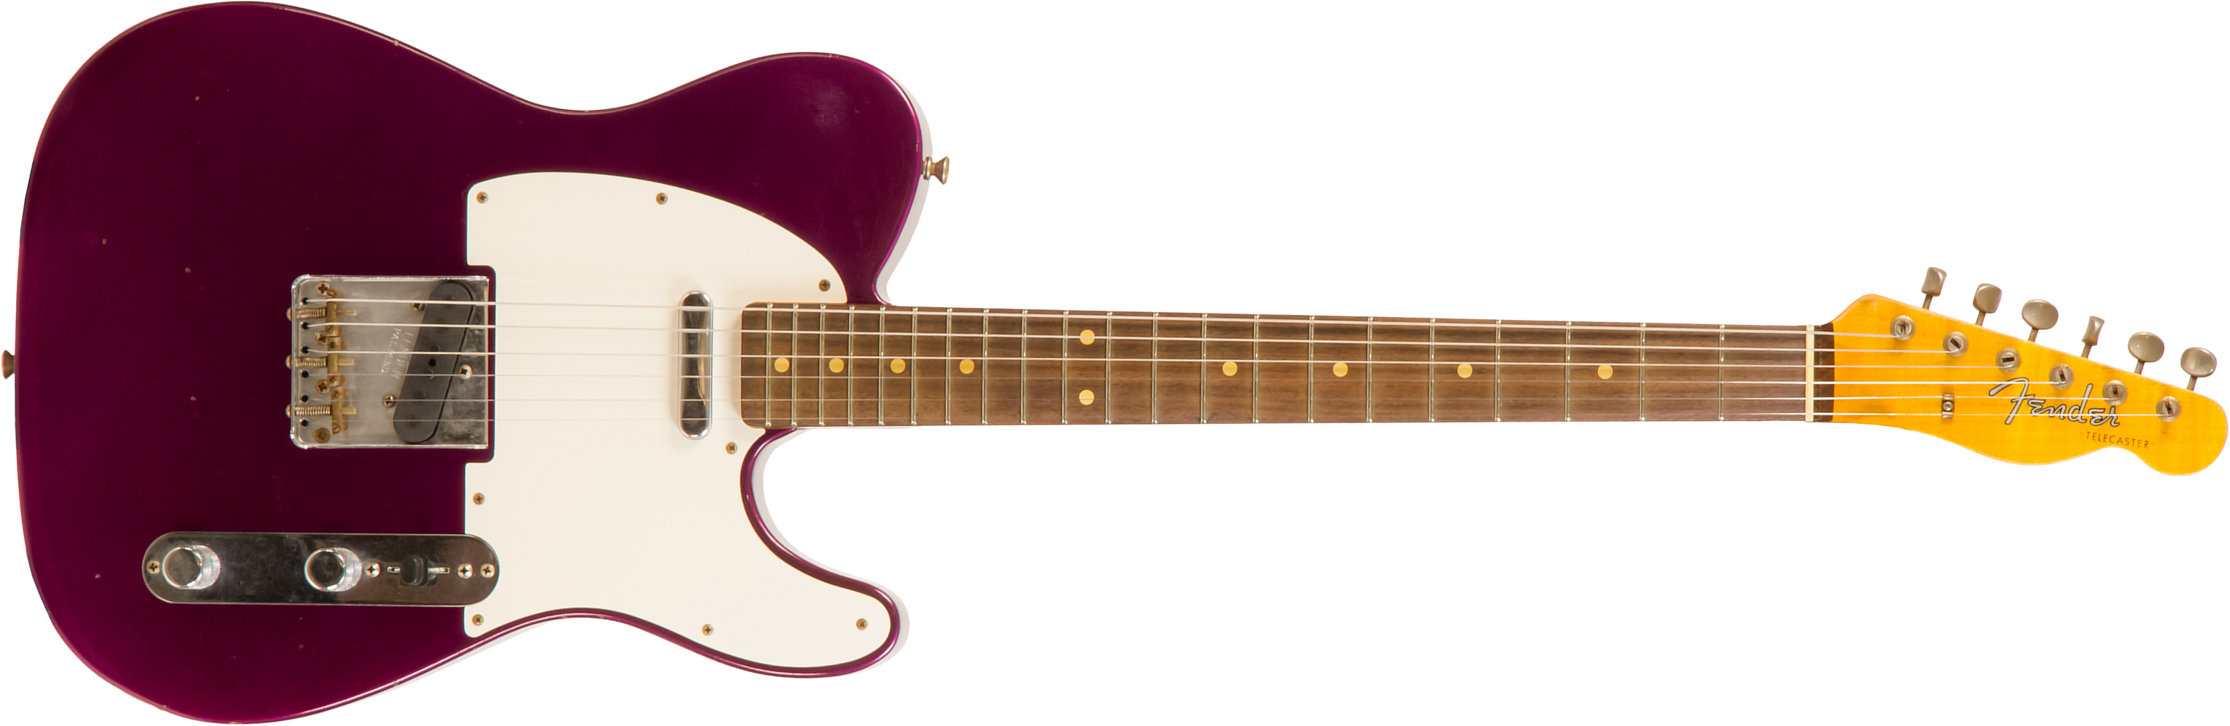 Fender Custom Shop Tele 1960 Rw #cz549121 - Journeyman Relic Purple Metallic - Tel shape electric guitar - Main picture